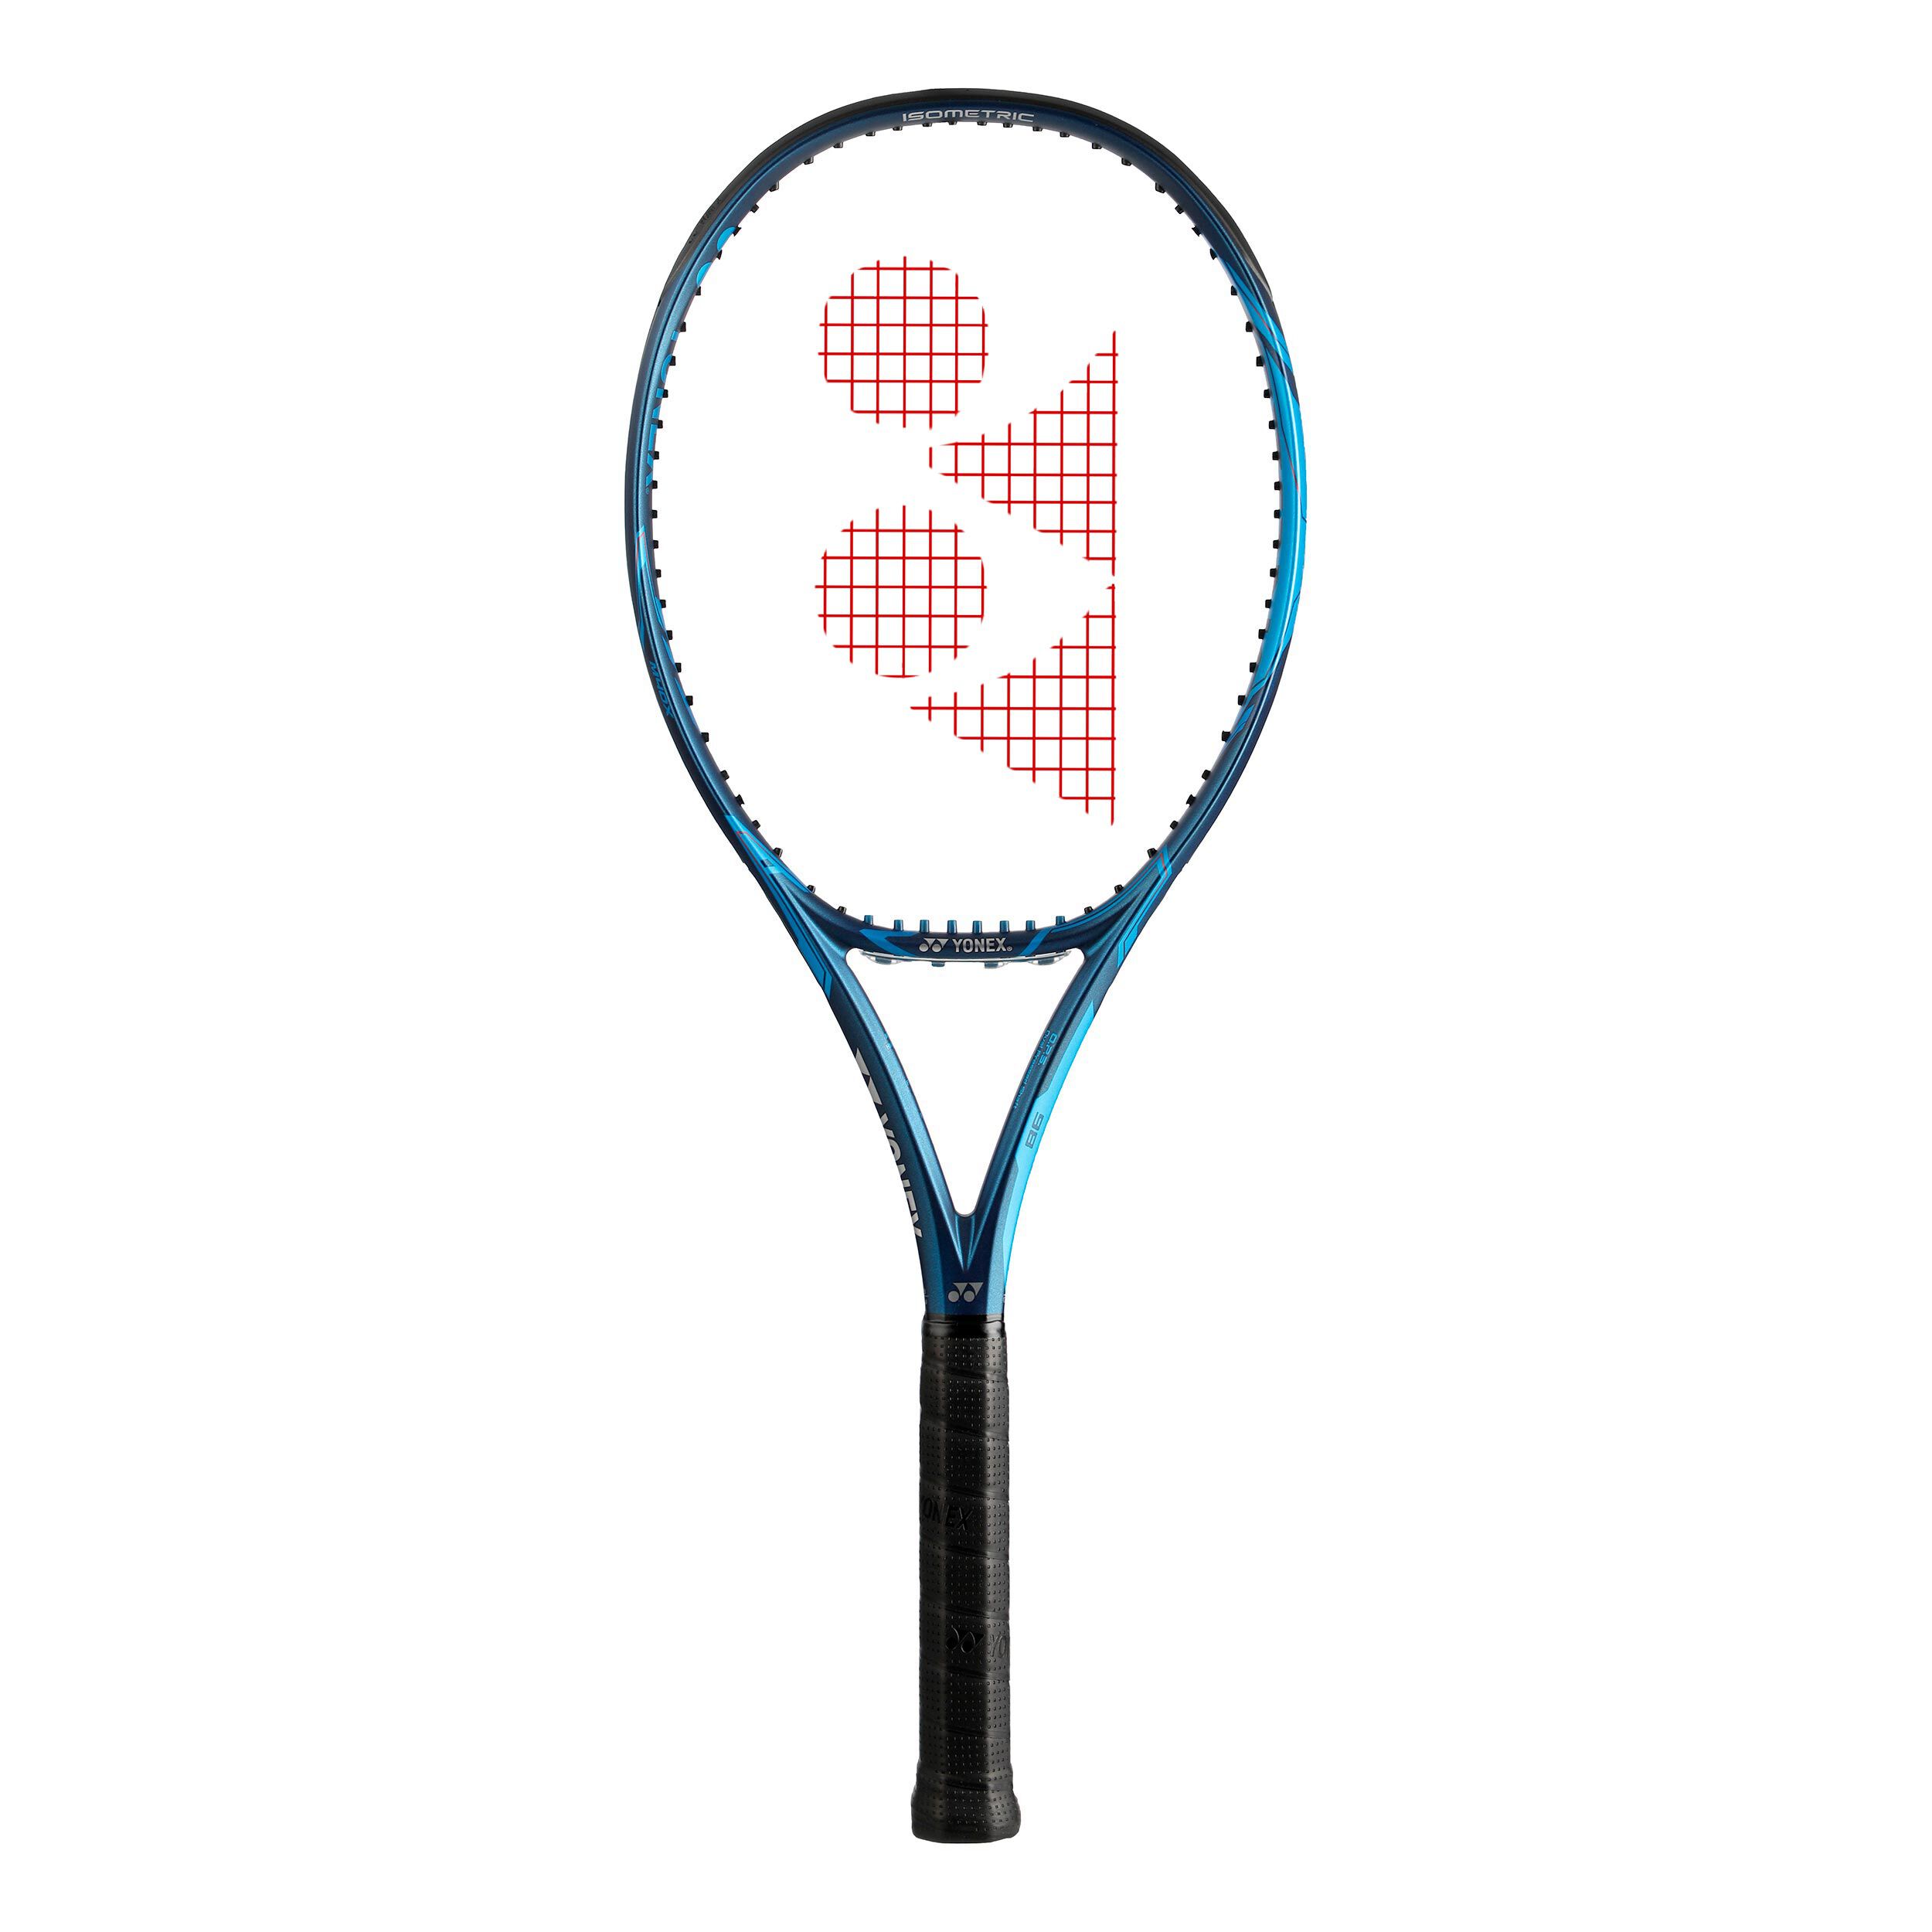 Yonex ezone 98 305g raqueta de tenis nuevo unbesaitet PVP 219,95 € nuevo 